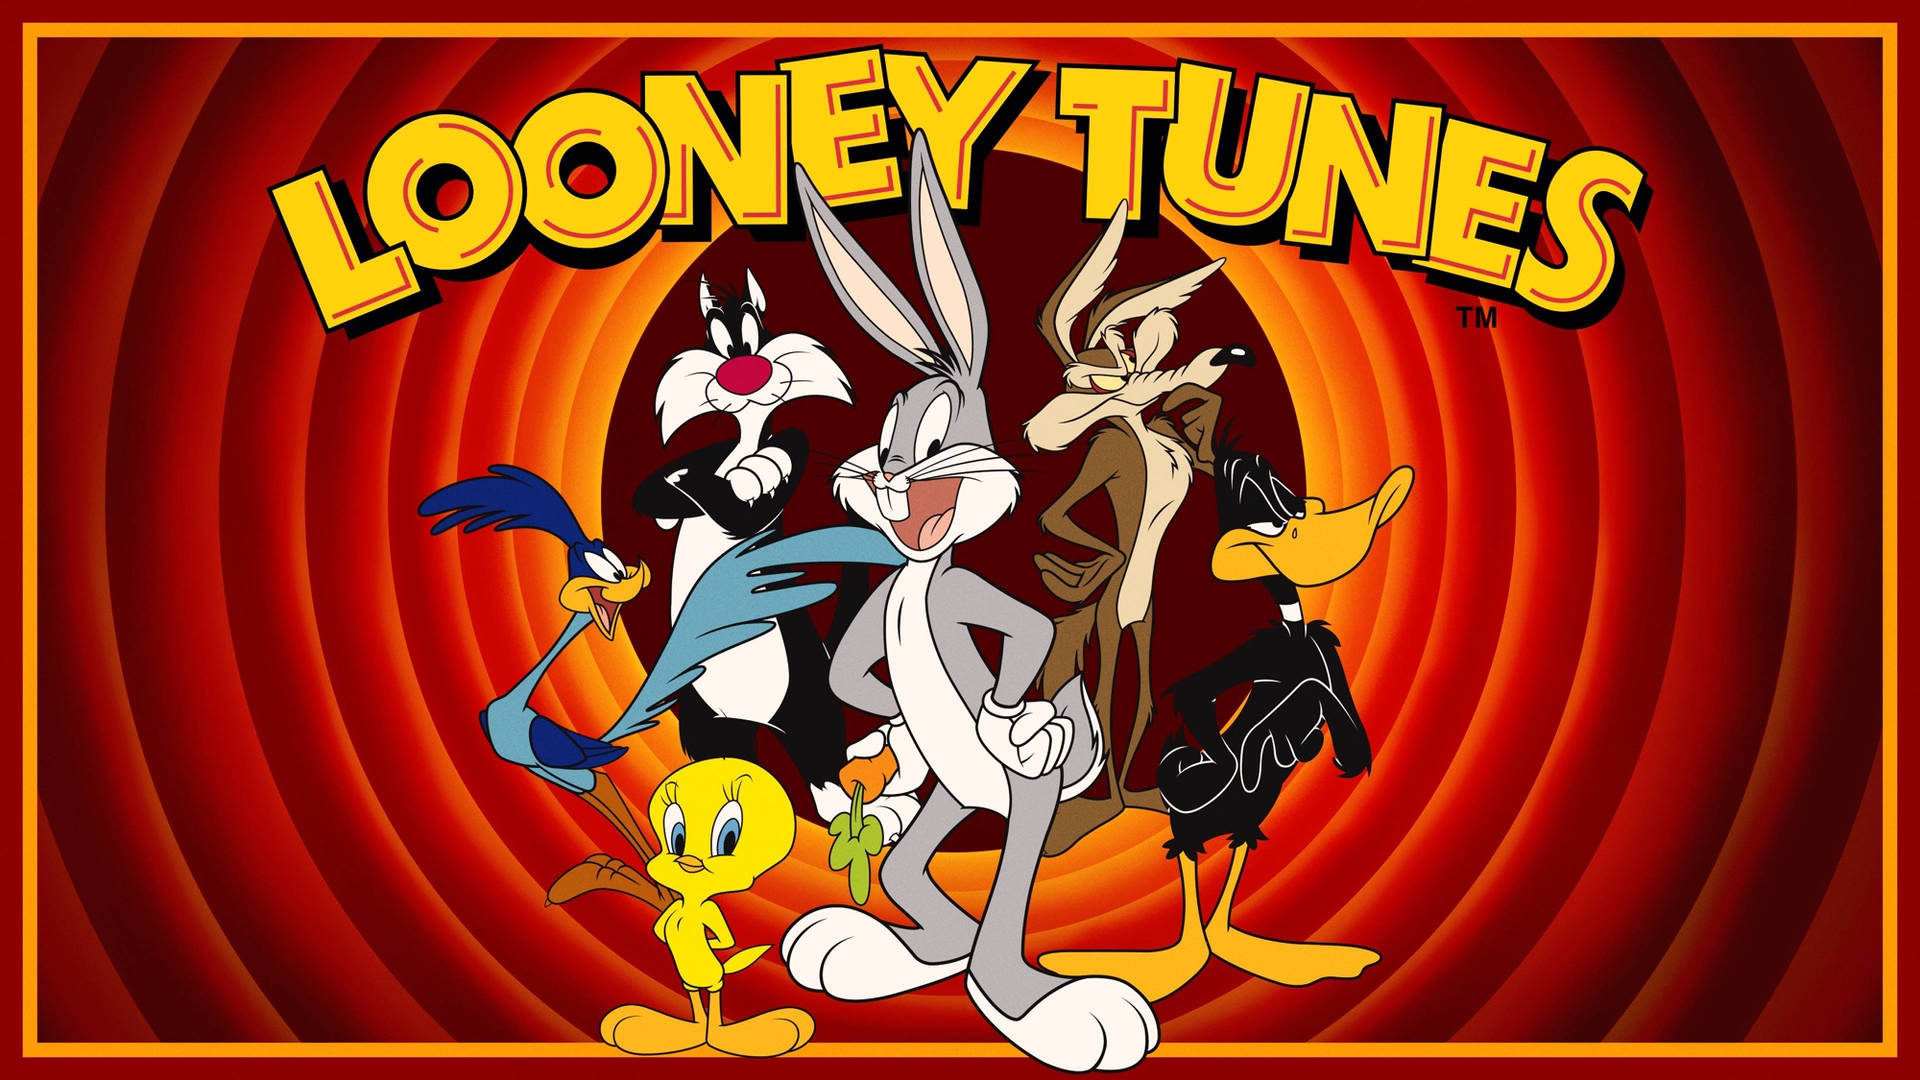 Wilee Coyote I Looney Tunes. Wallpaper